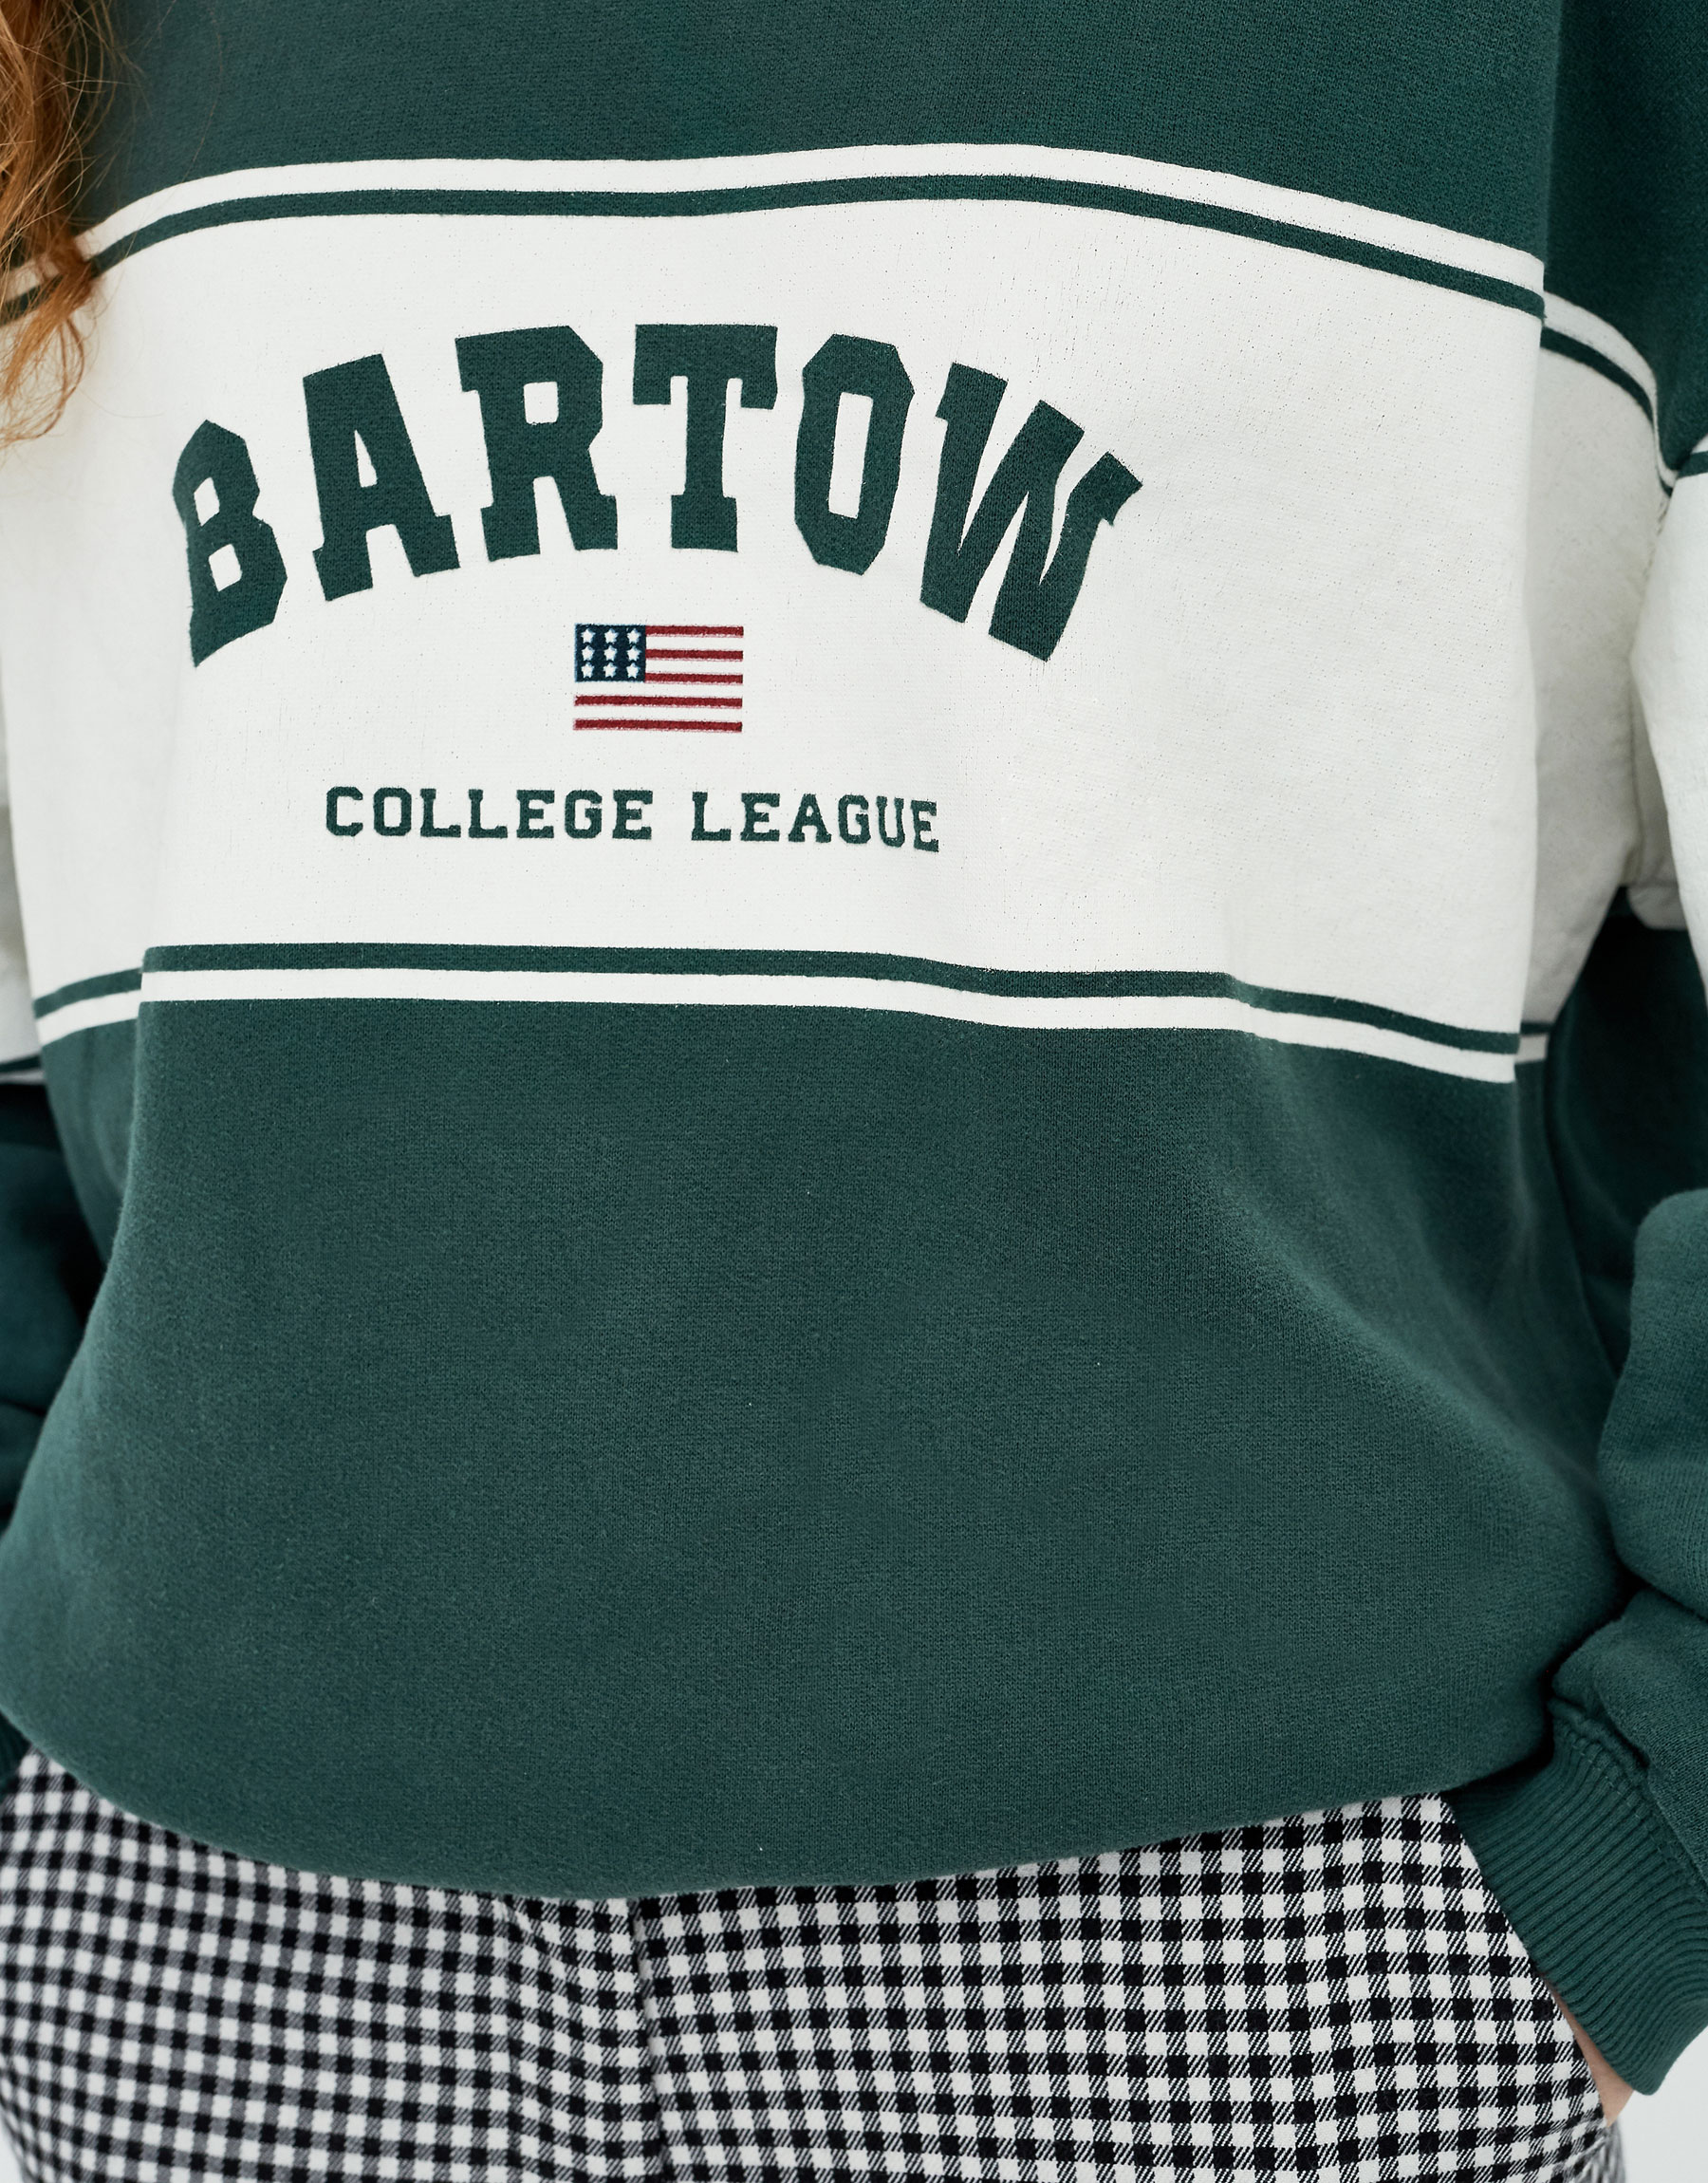 bartow college league sweatshirt